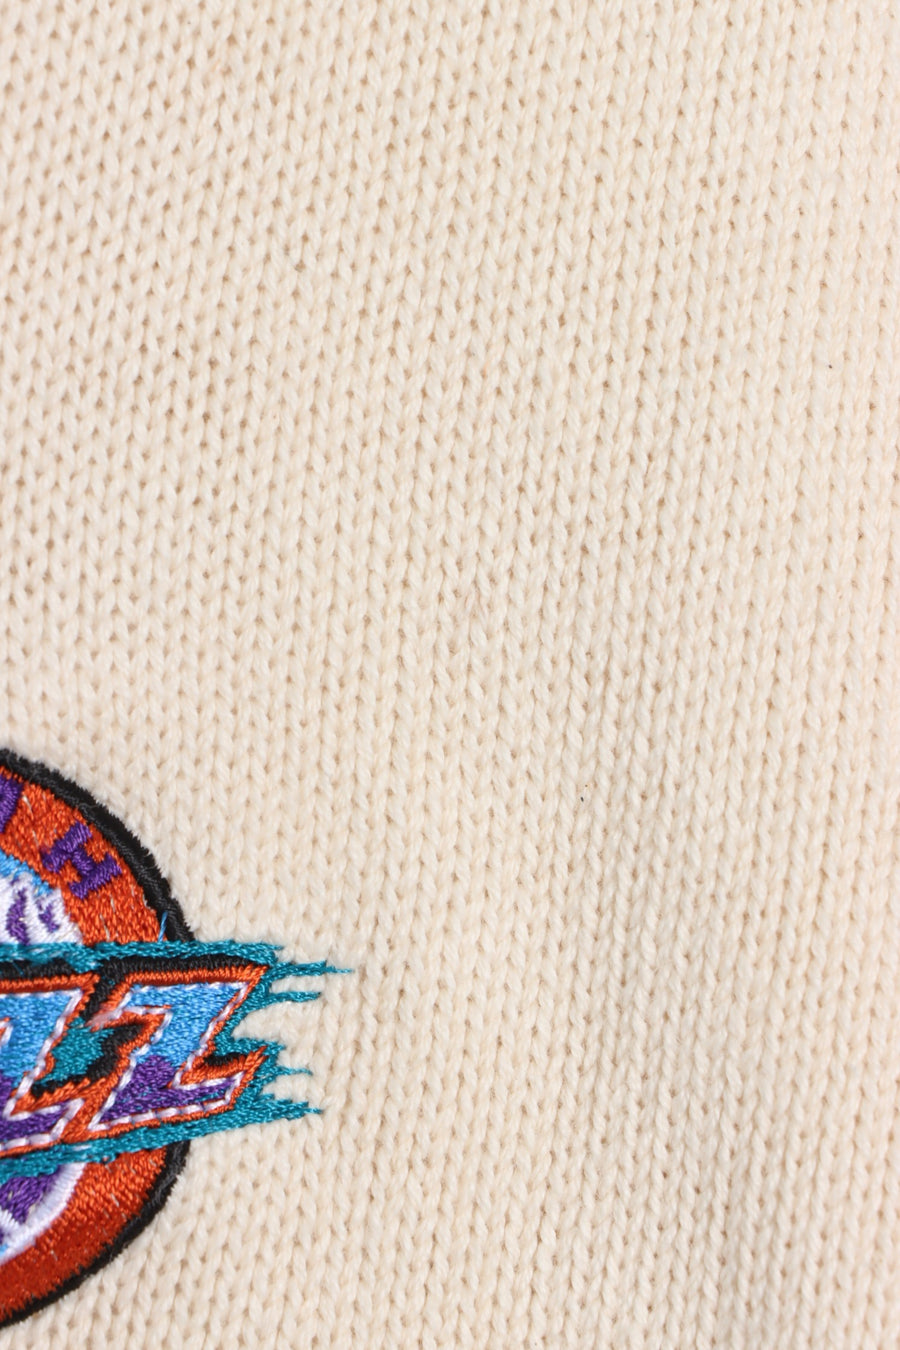 NBA Utah Jazz Embroidered Logo V-Neck Knit Sweater USA Made (L)